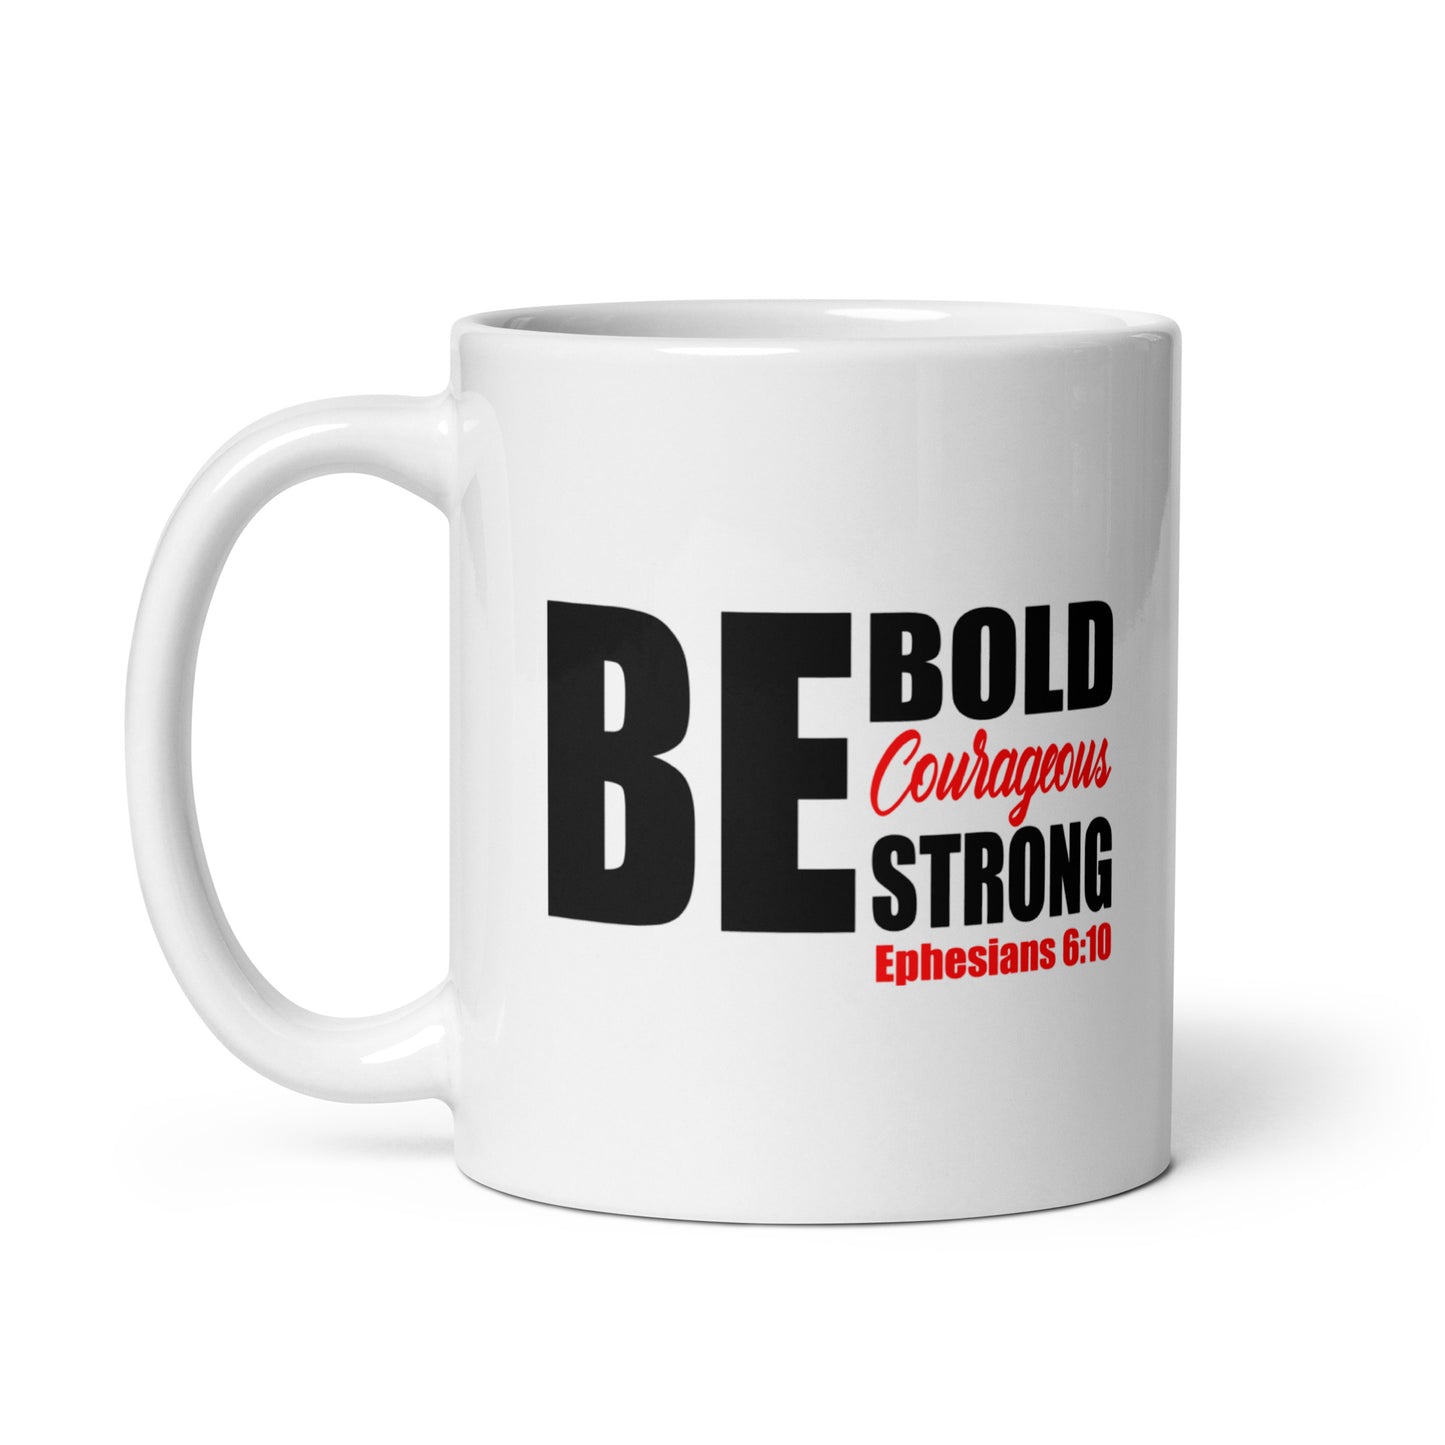 Be Bold Courageous Strong Mug